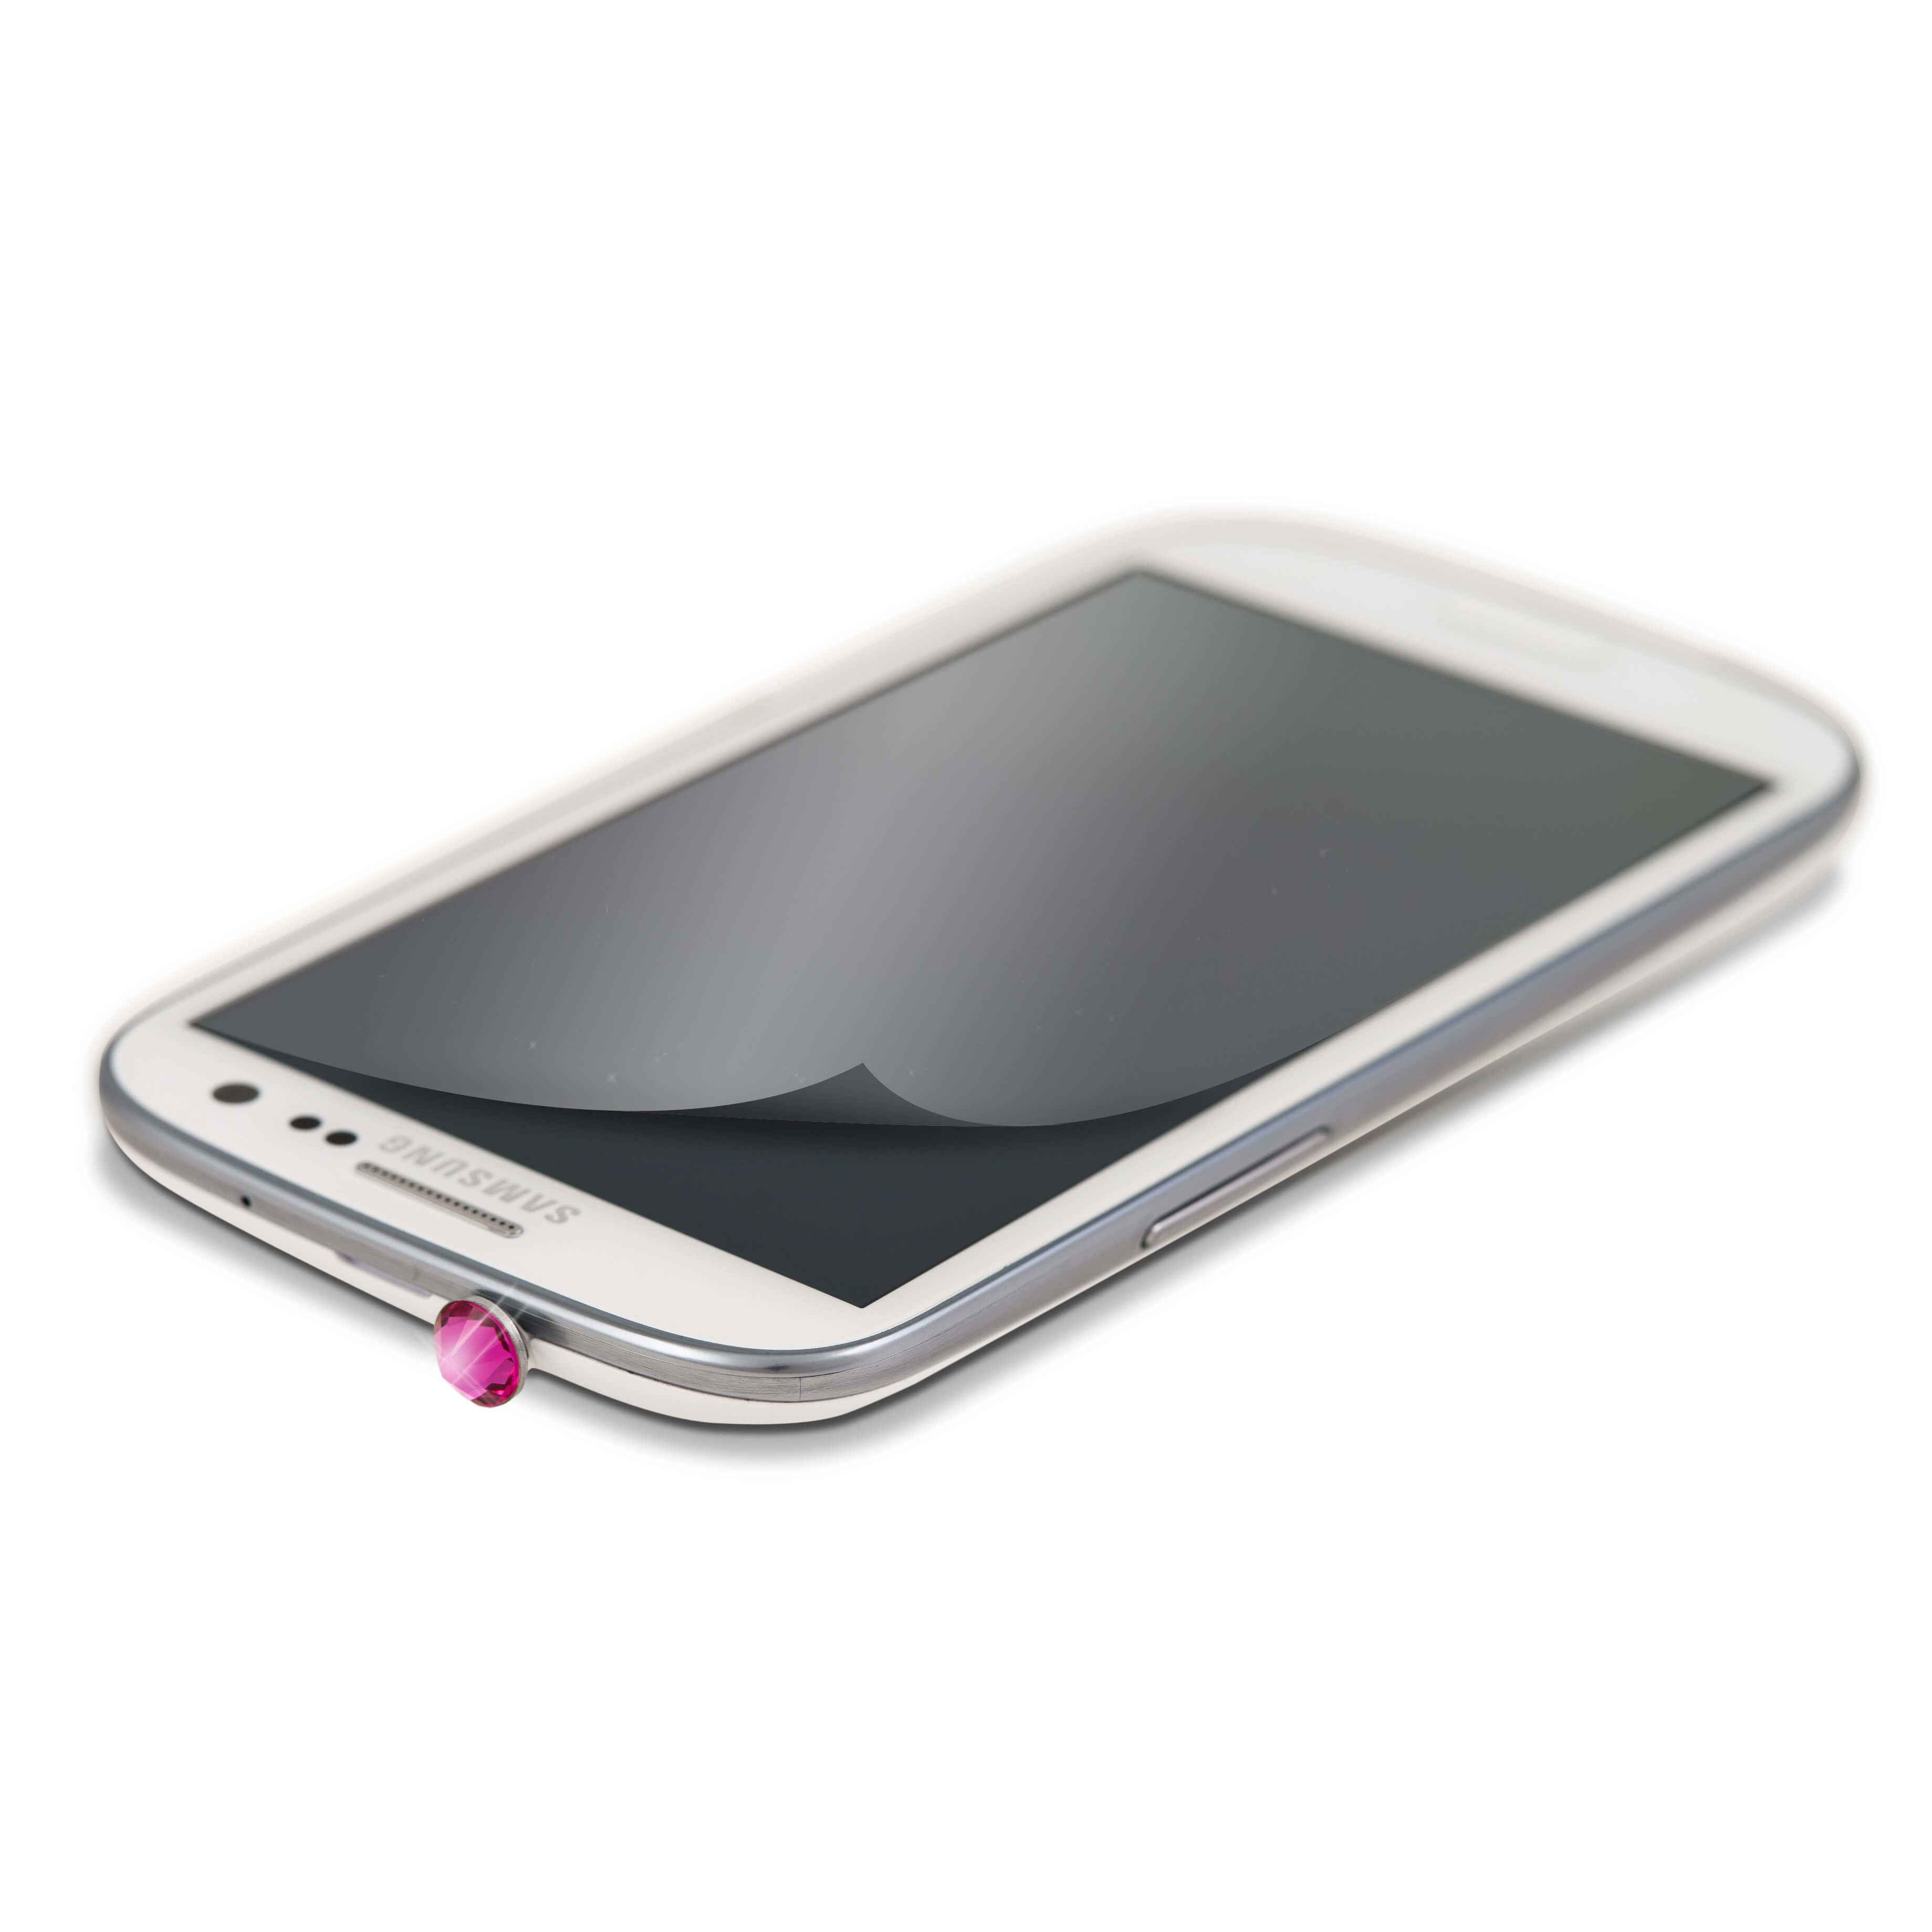 Crystal Pin for Samsung Galax y S III, pink